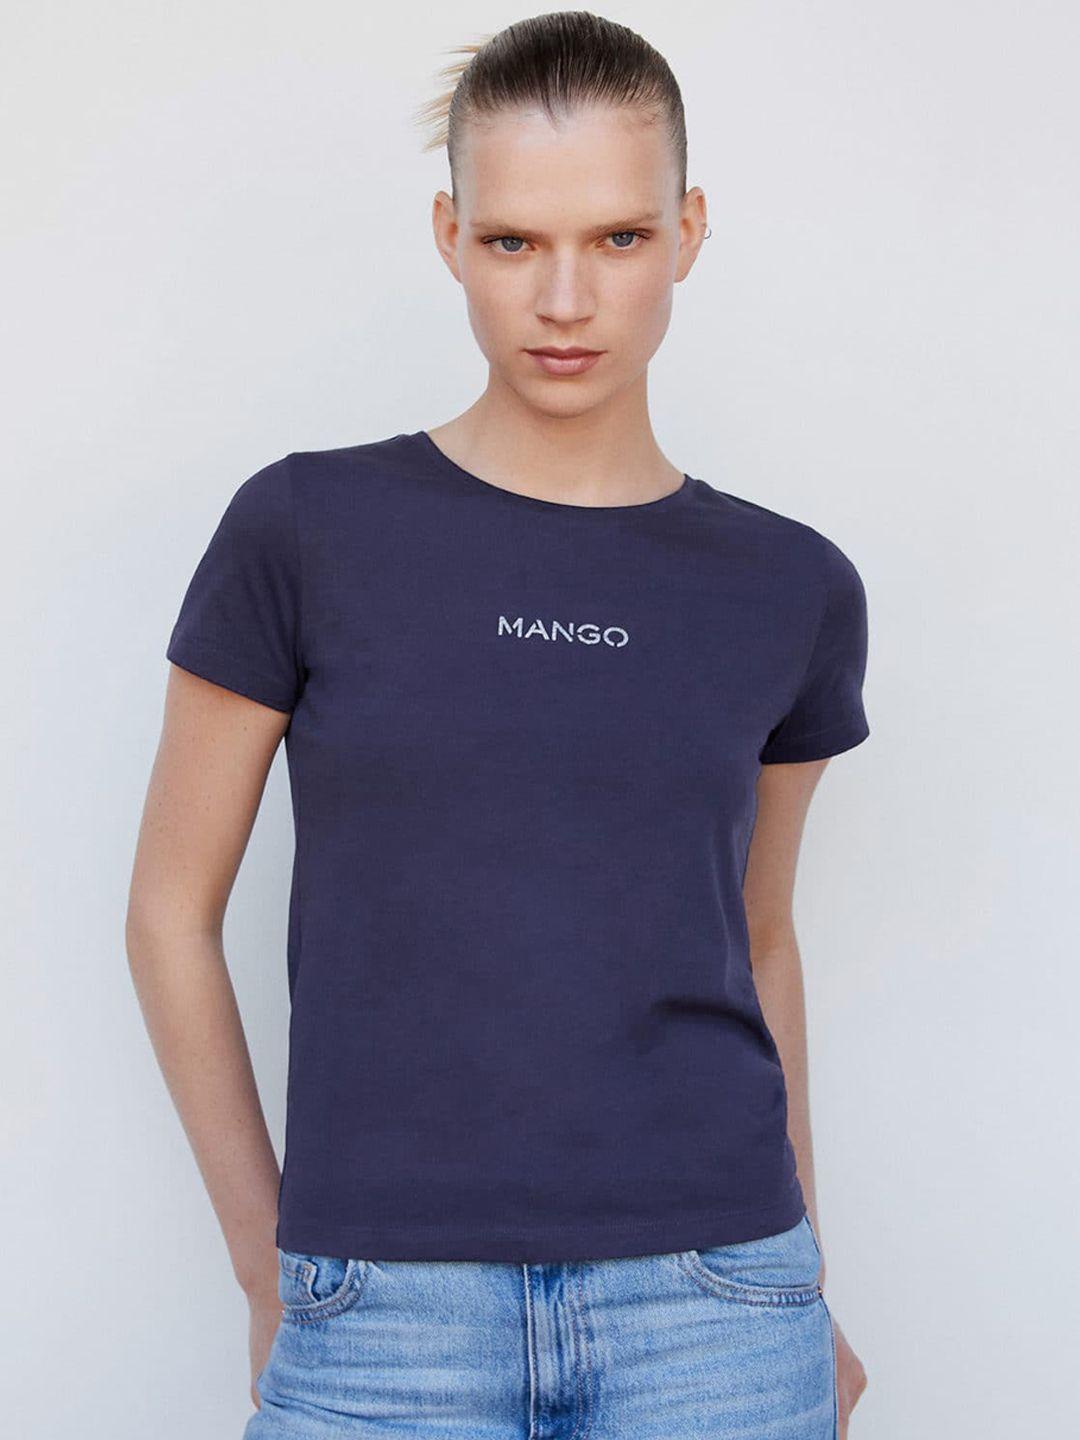 mango-women-brand-logo-printed-pure-cotton-t-shirt